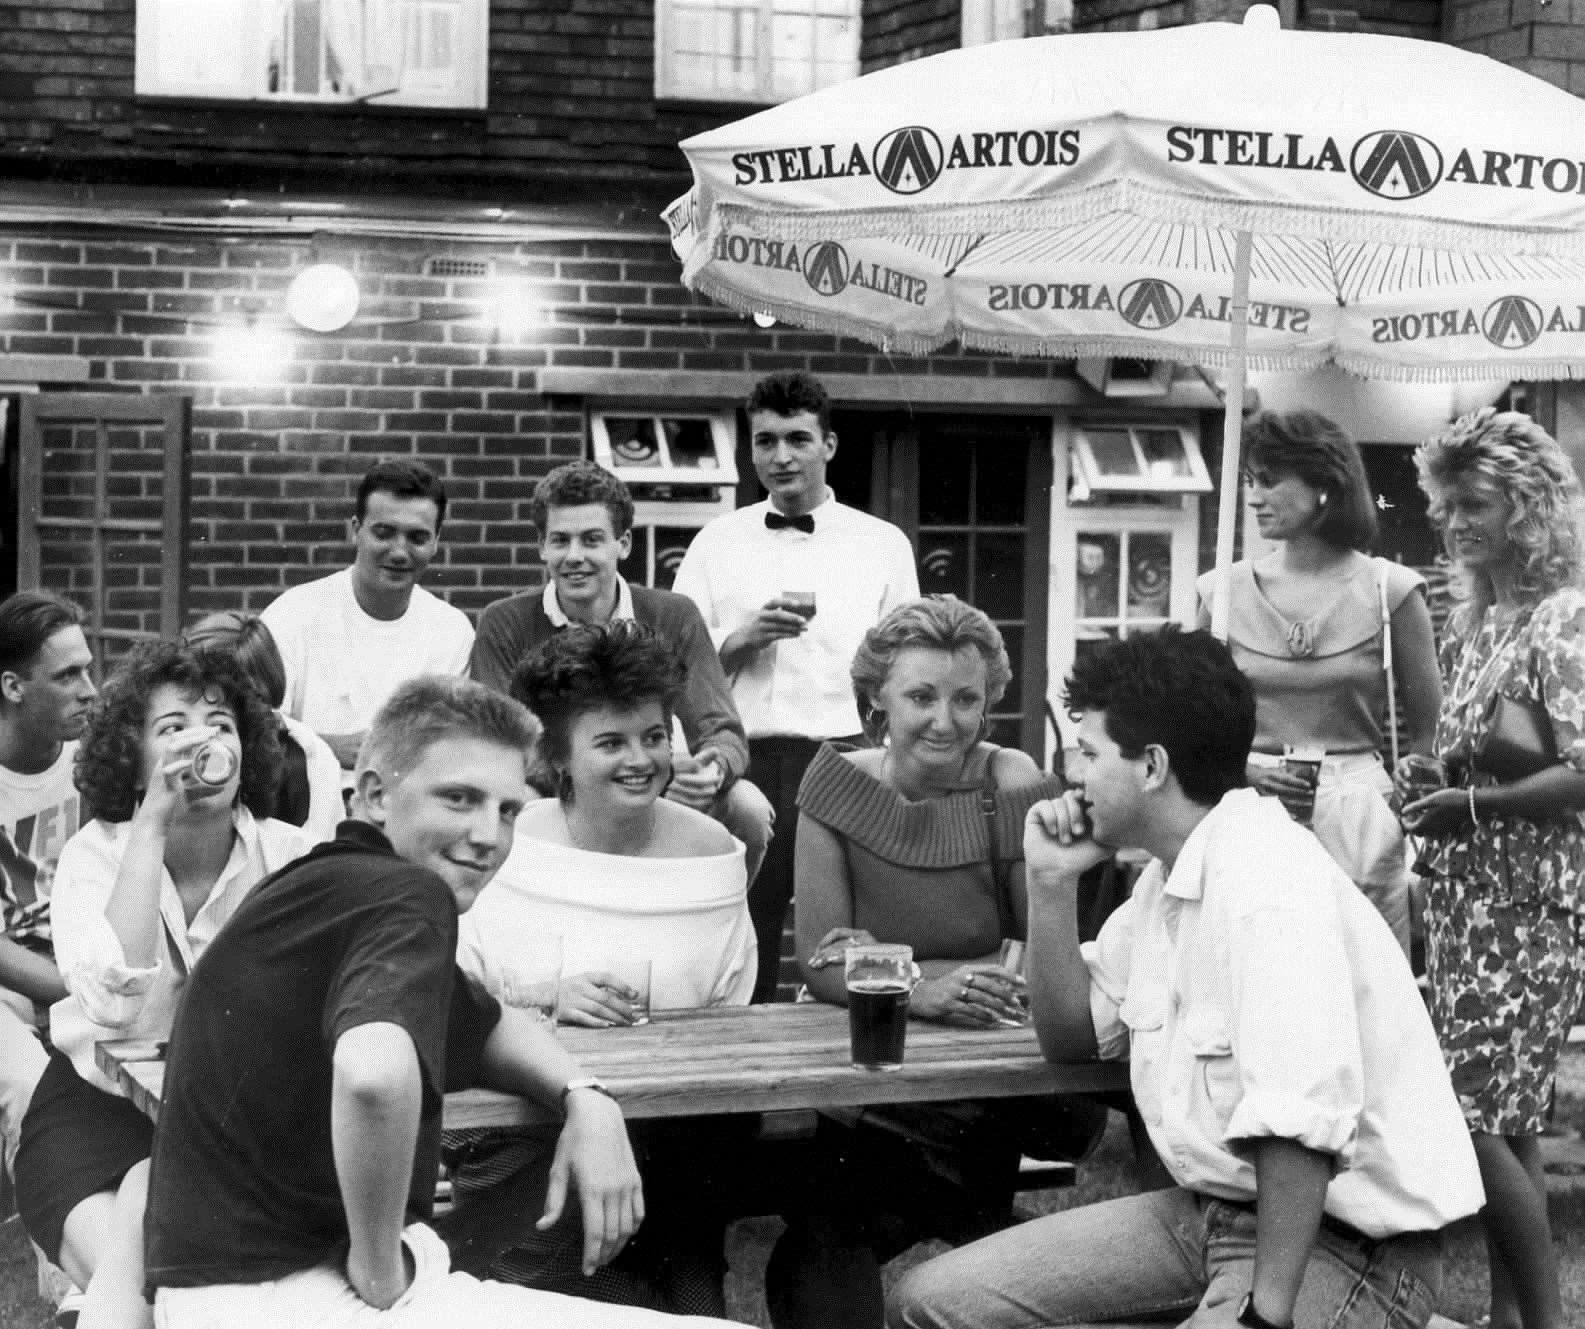 Penenden Heath pub, near Maidstone, August 1988